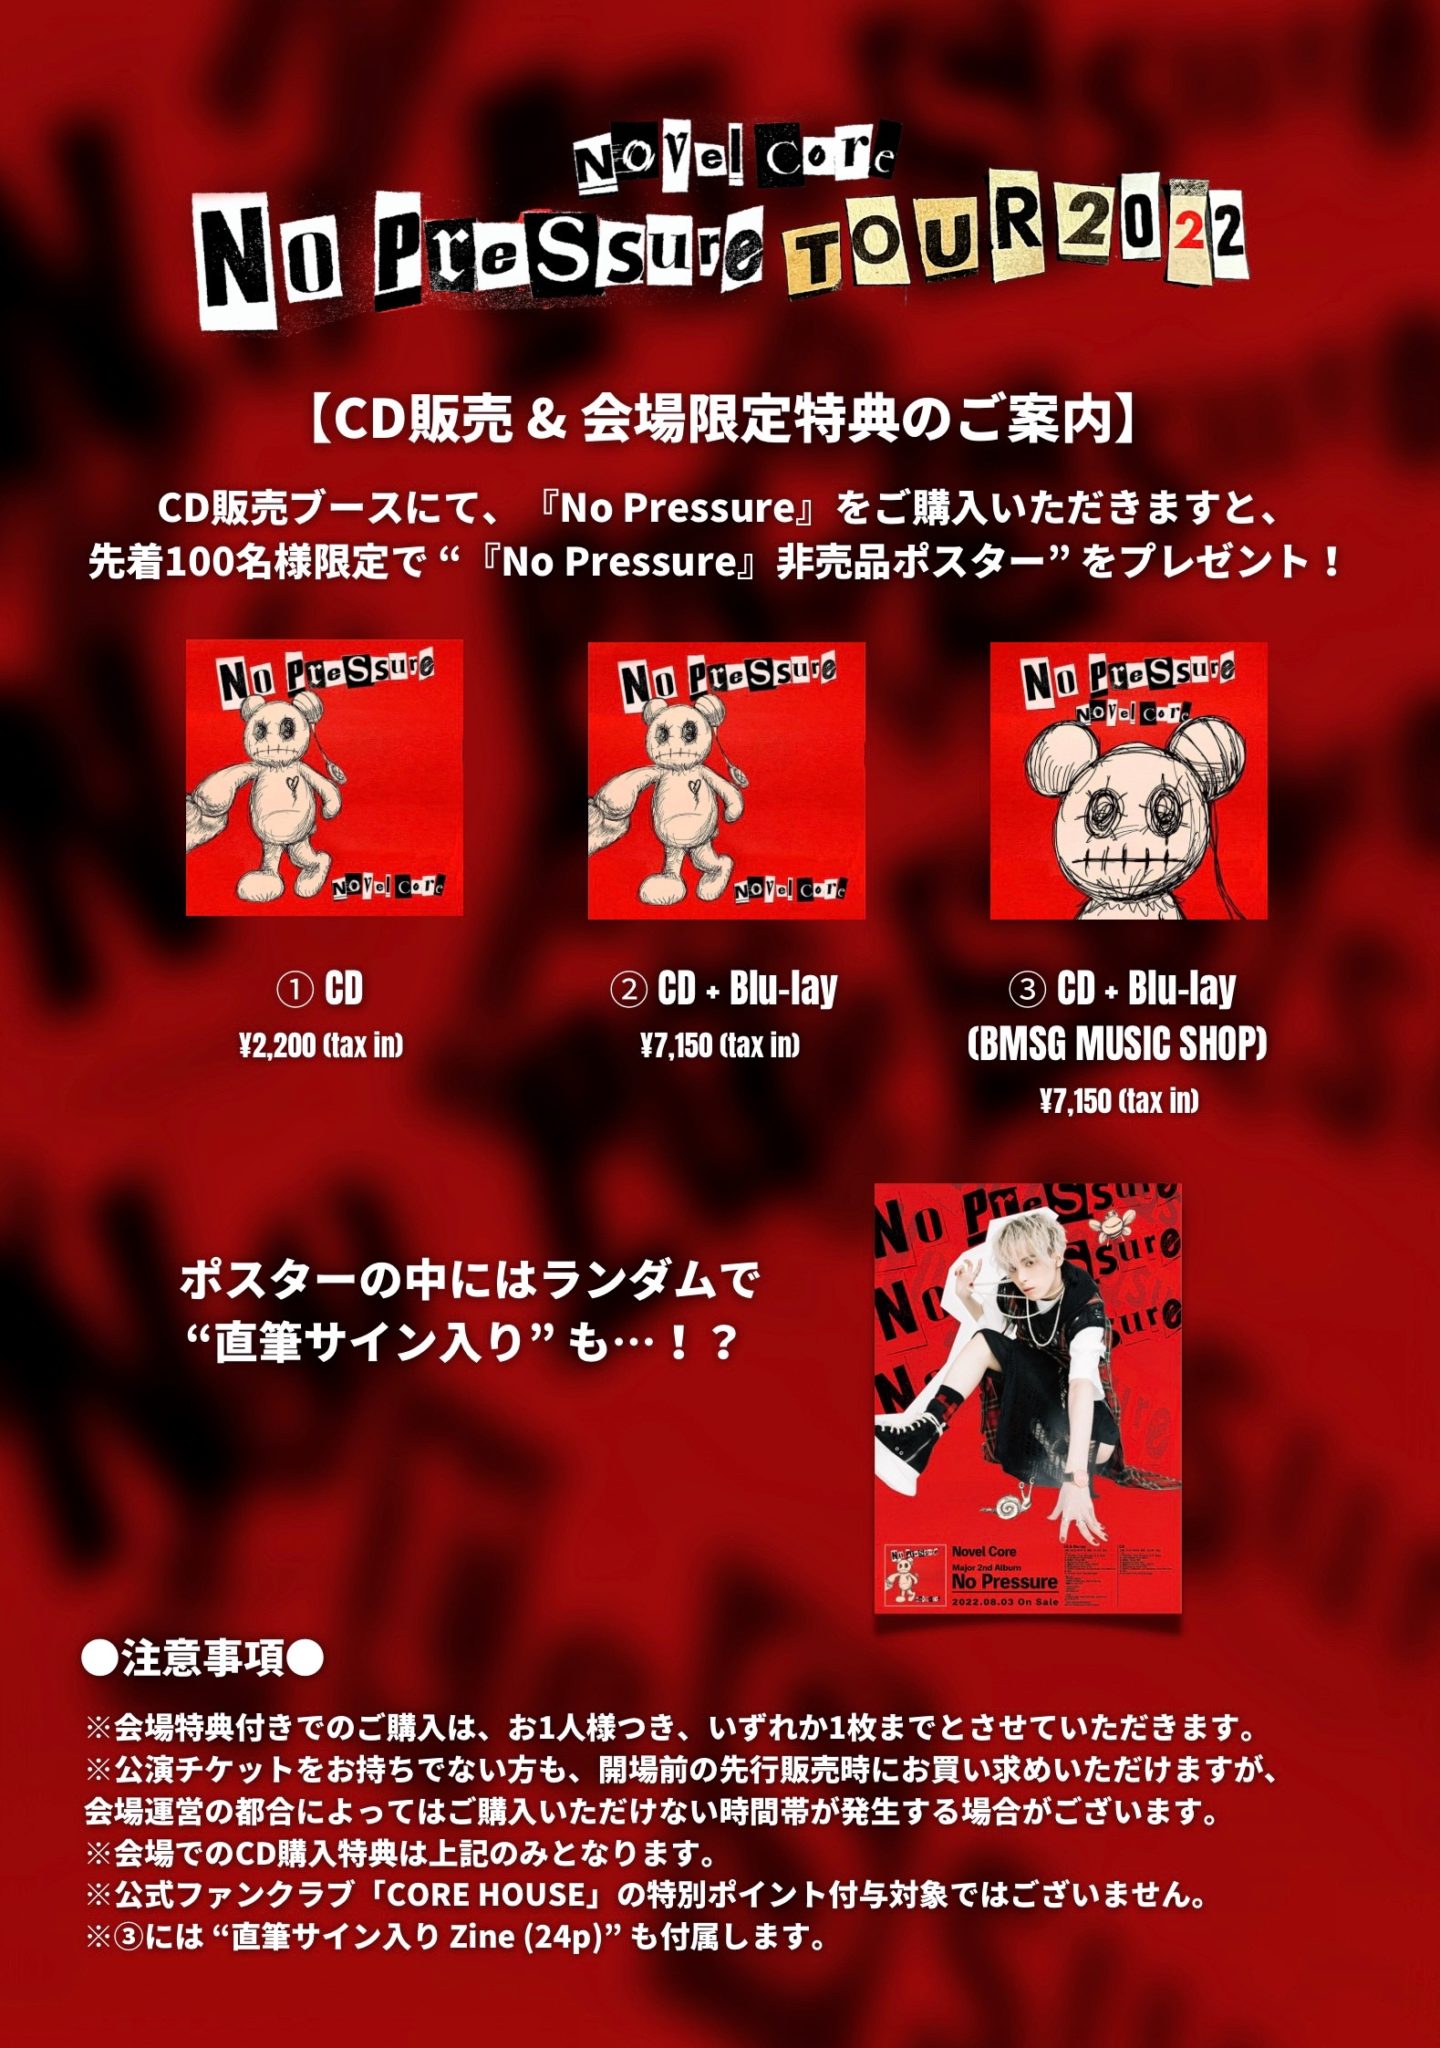 「No Pressure TOUR 2022」CD販売 & 会場限定の購入特典のお知らせ Novel Core Official Website